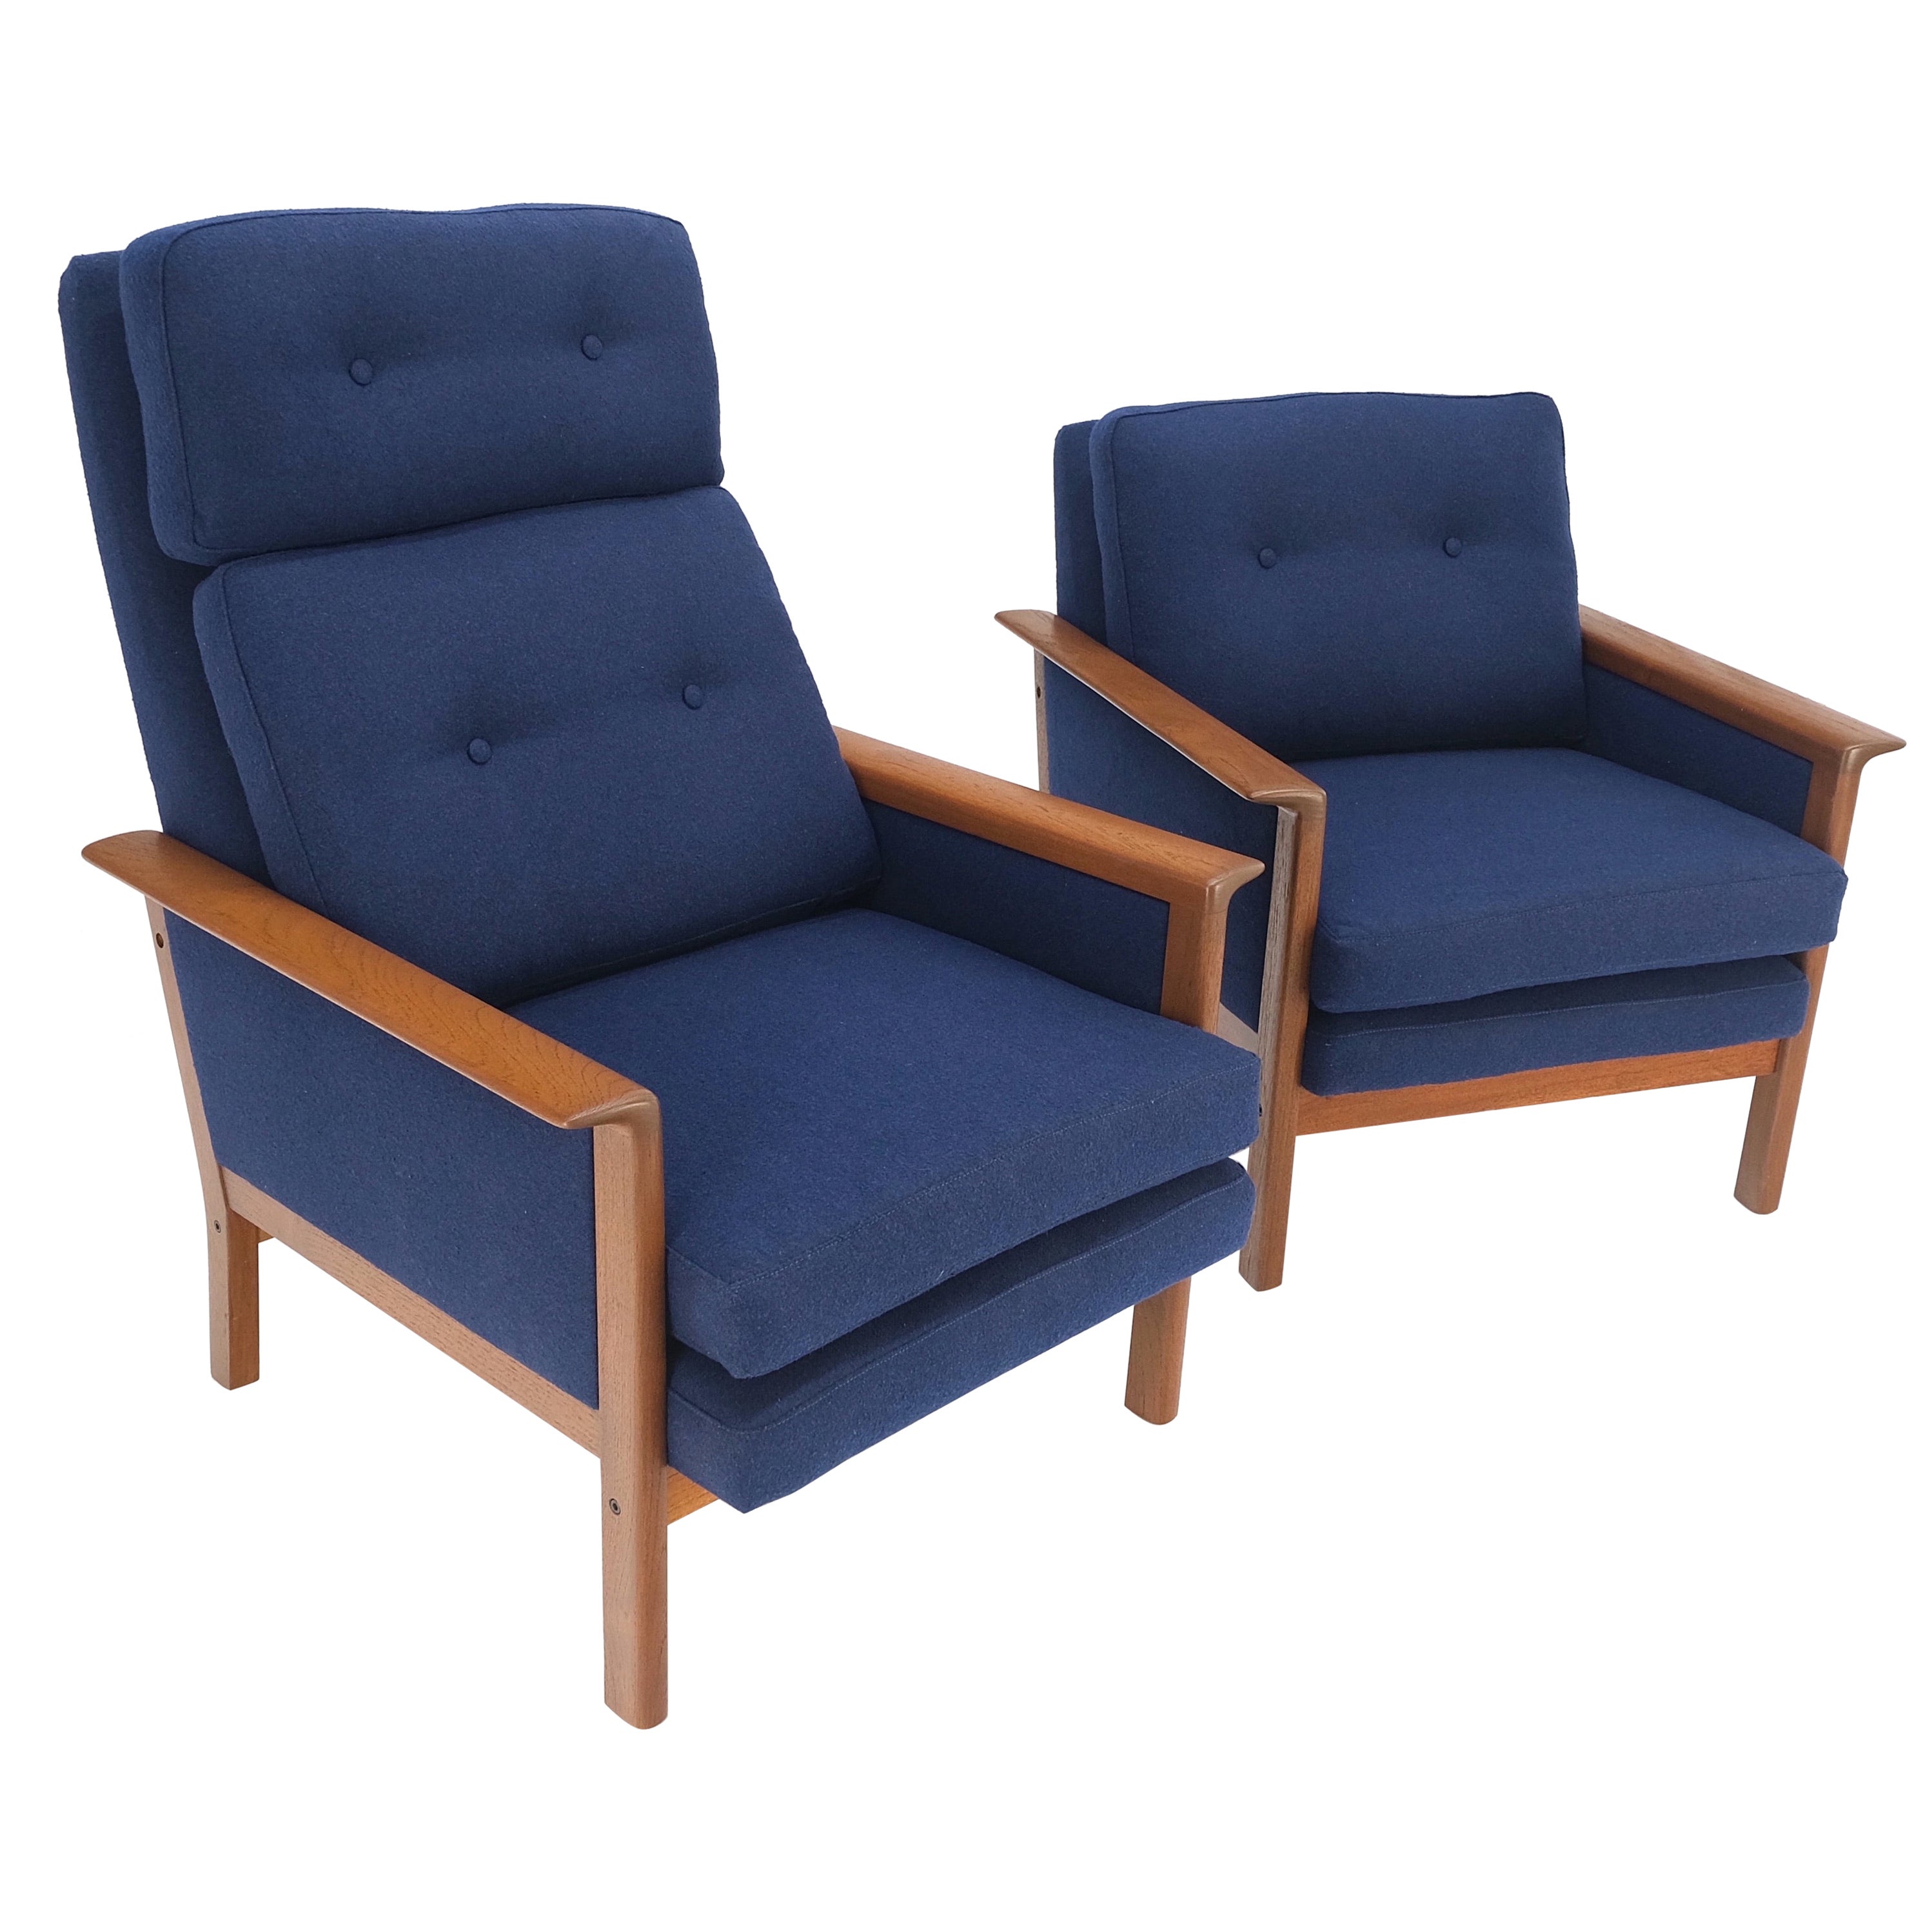 Danish Mid Century Modern Teak Frames New Wool Upholstery Lounge Chairs Refinish